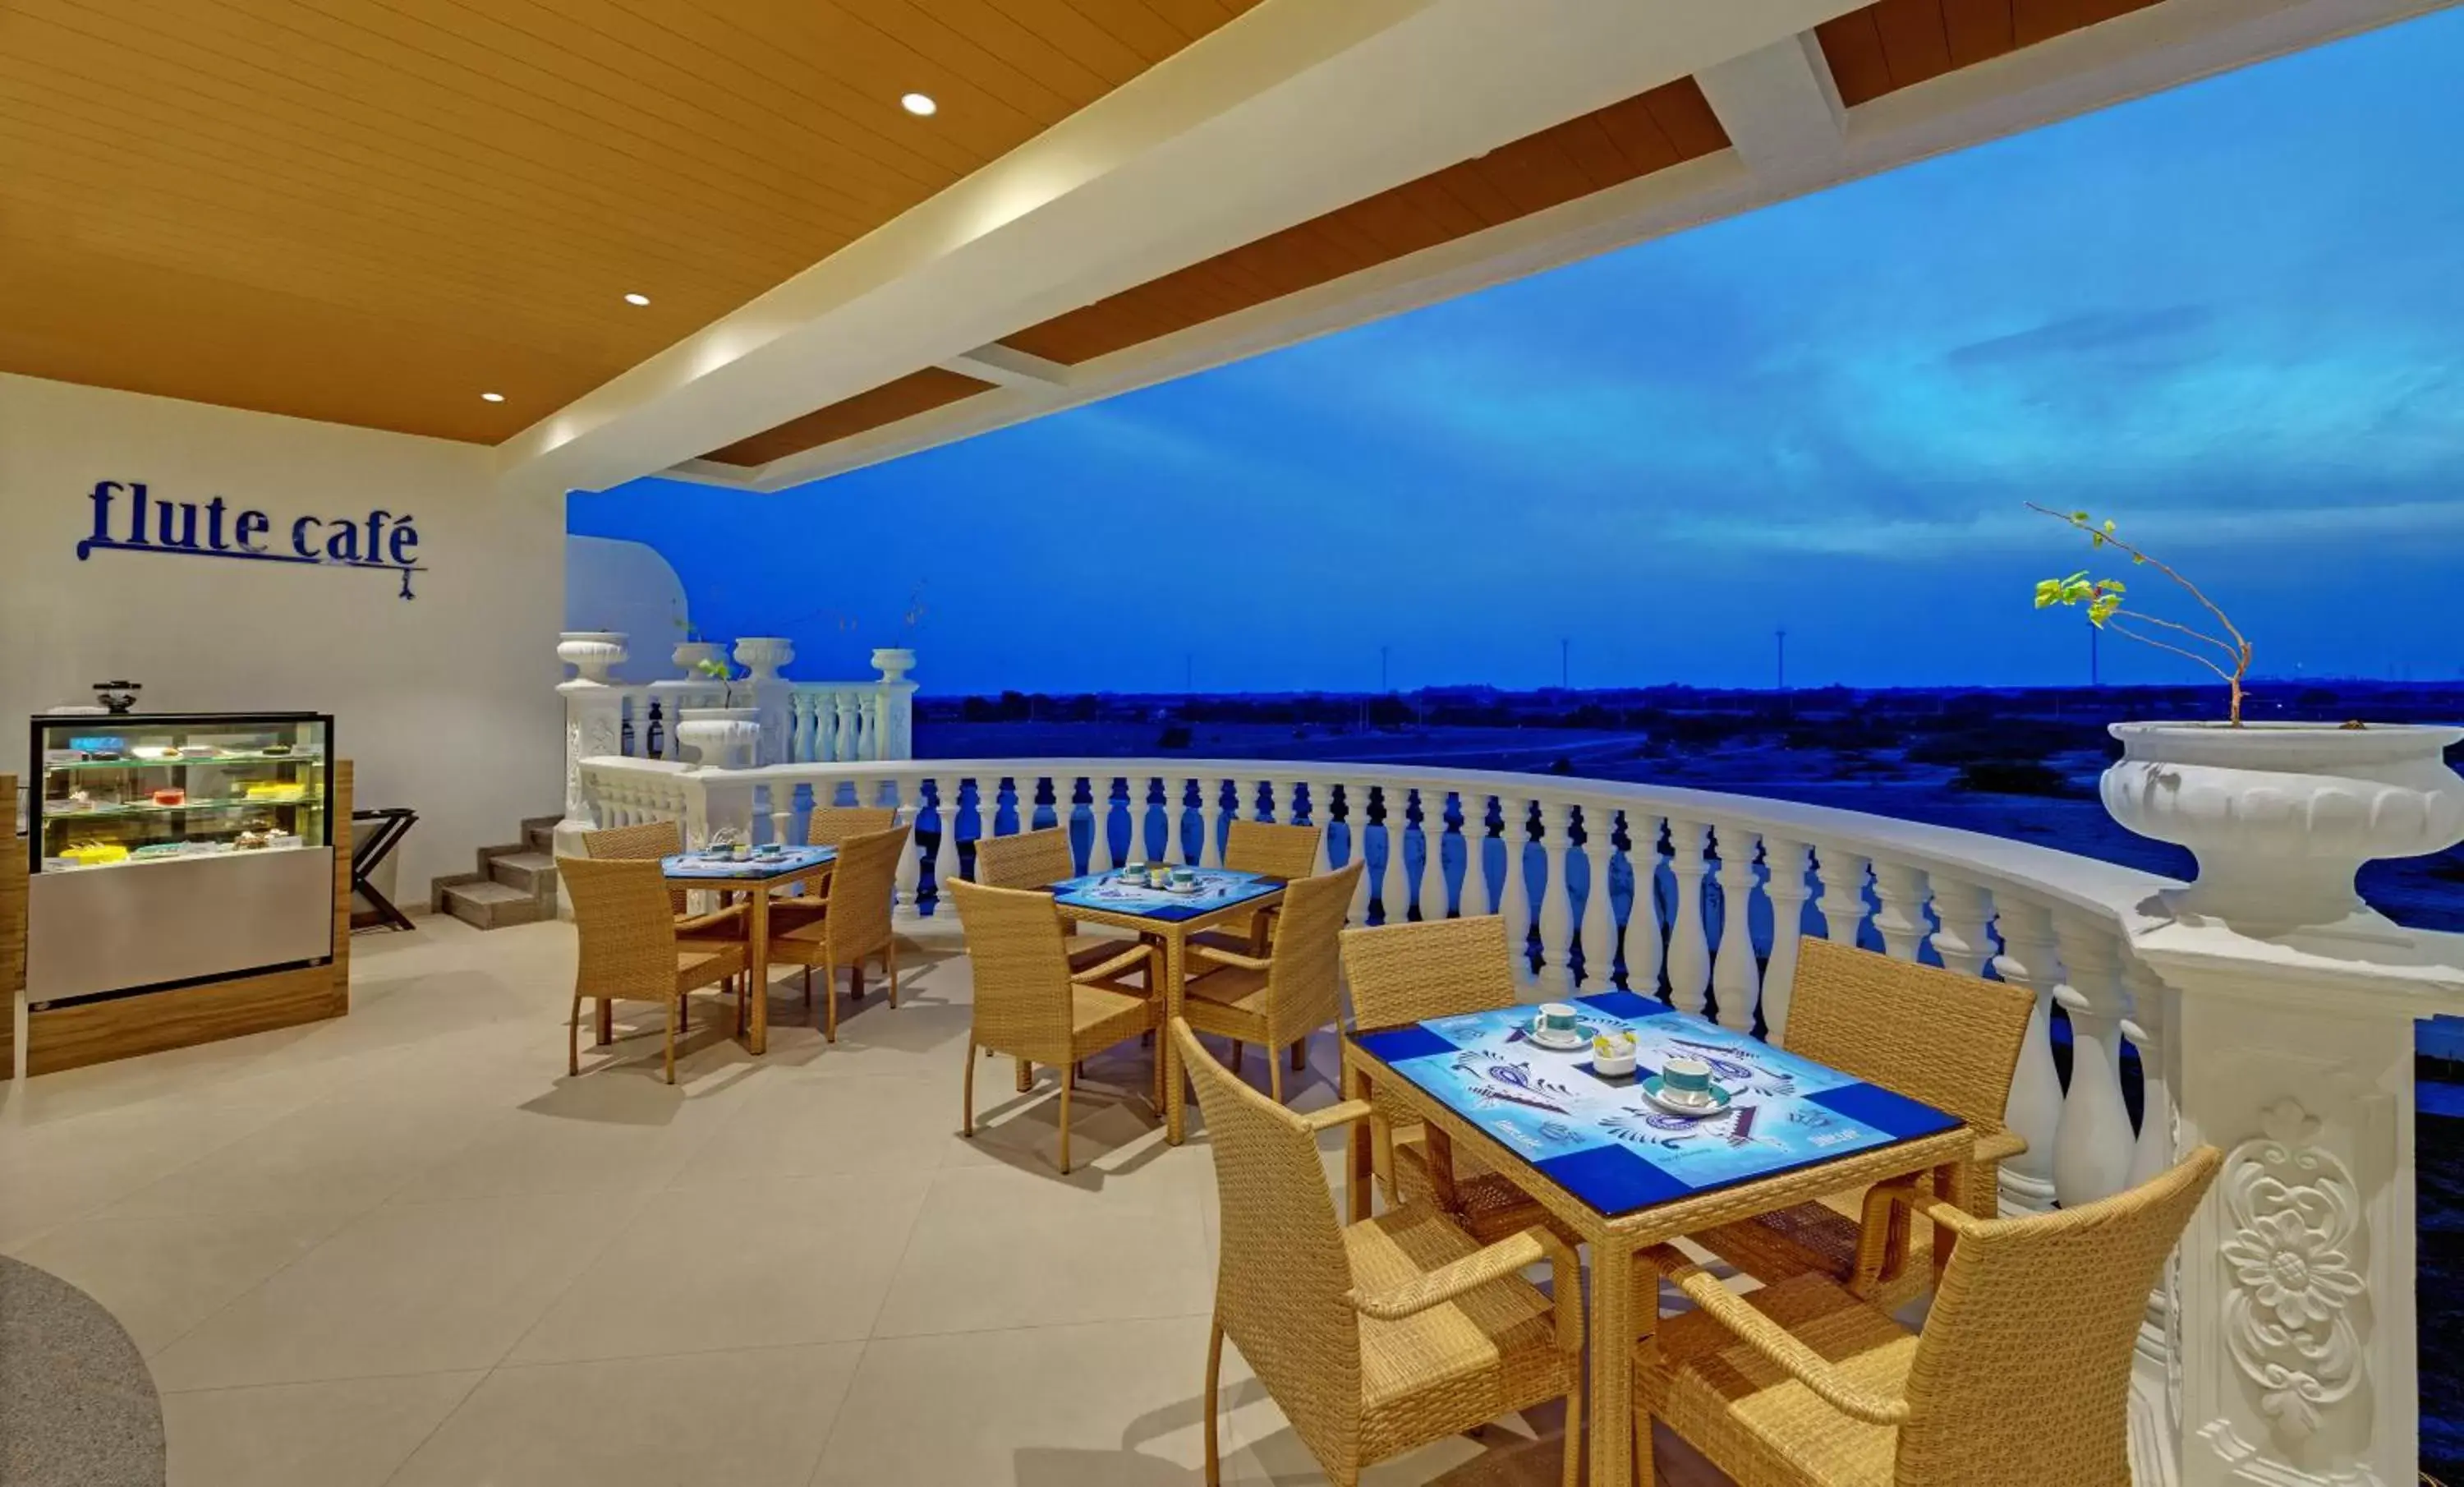 Restaurant/places to eat in The Fern Sattva Resort, Dwarka